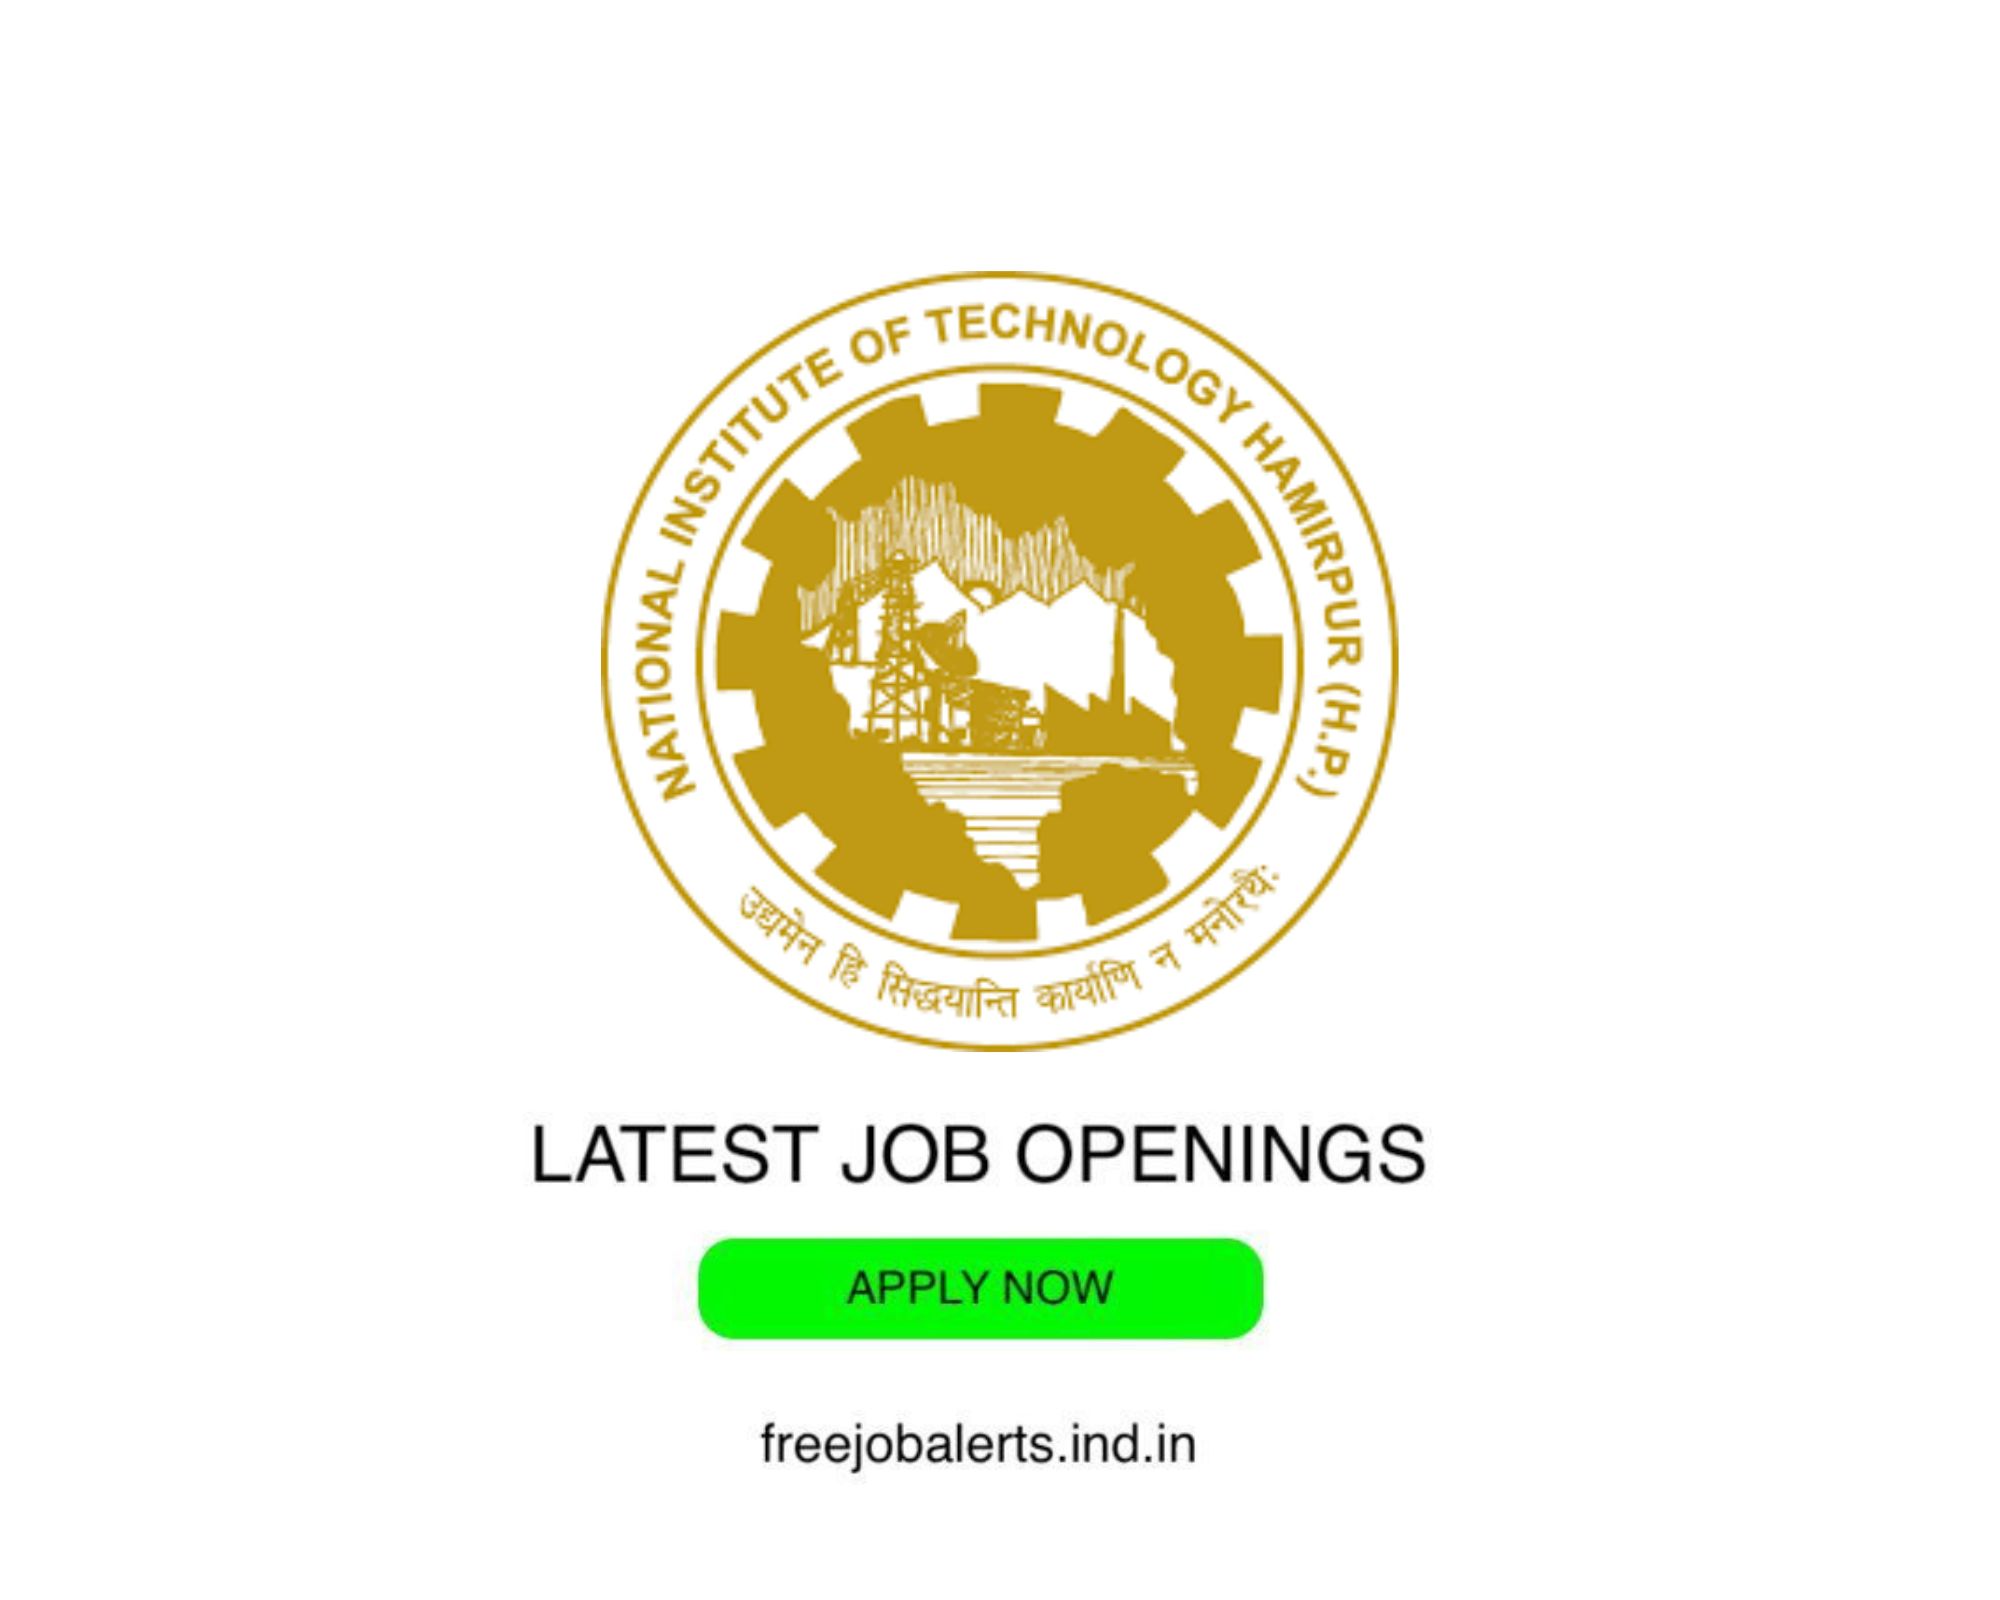 National Institute of Technology (NIT), Hamirpur - Latest Govt job openings - Free job alerts, Indian Govt Jobs